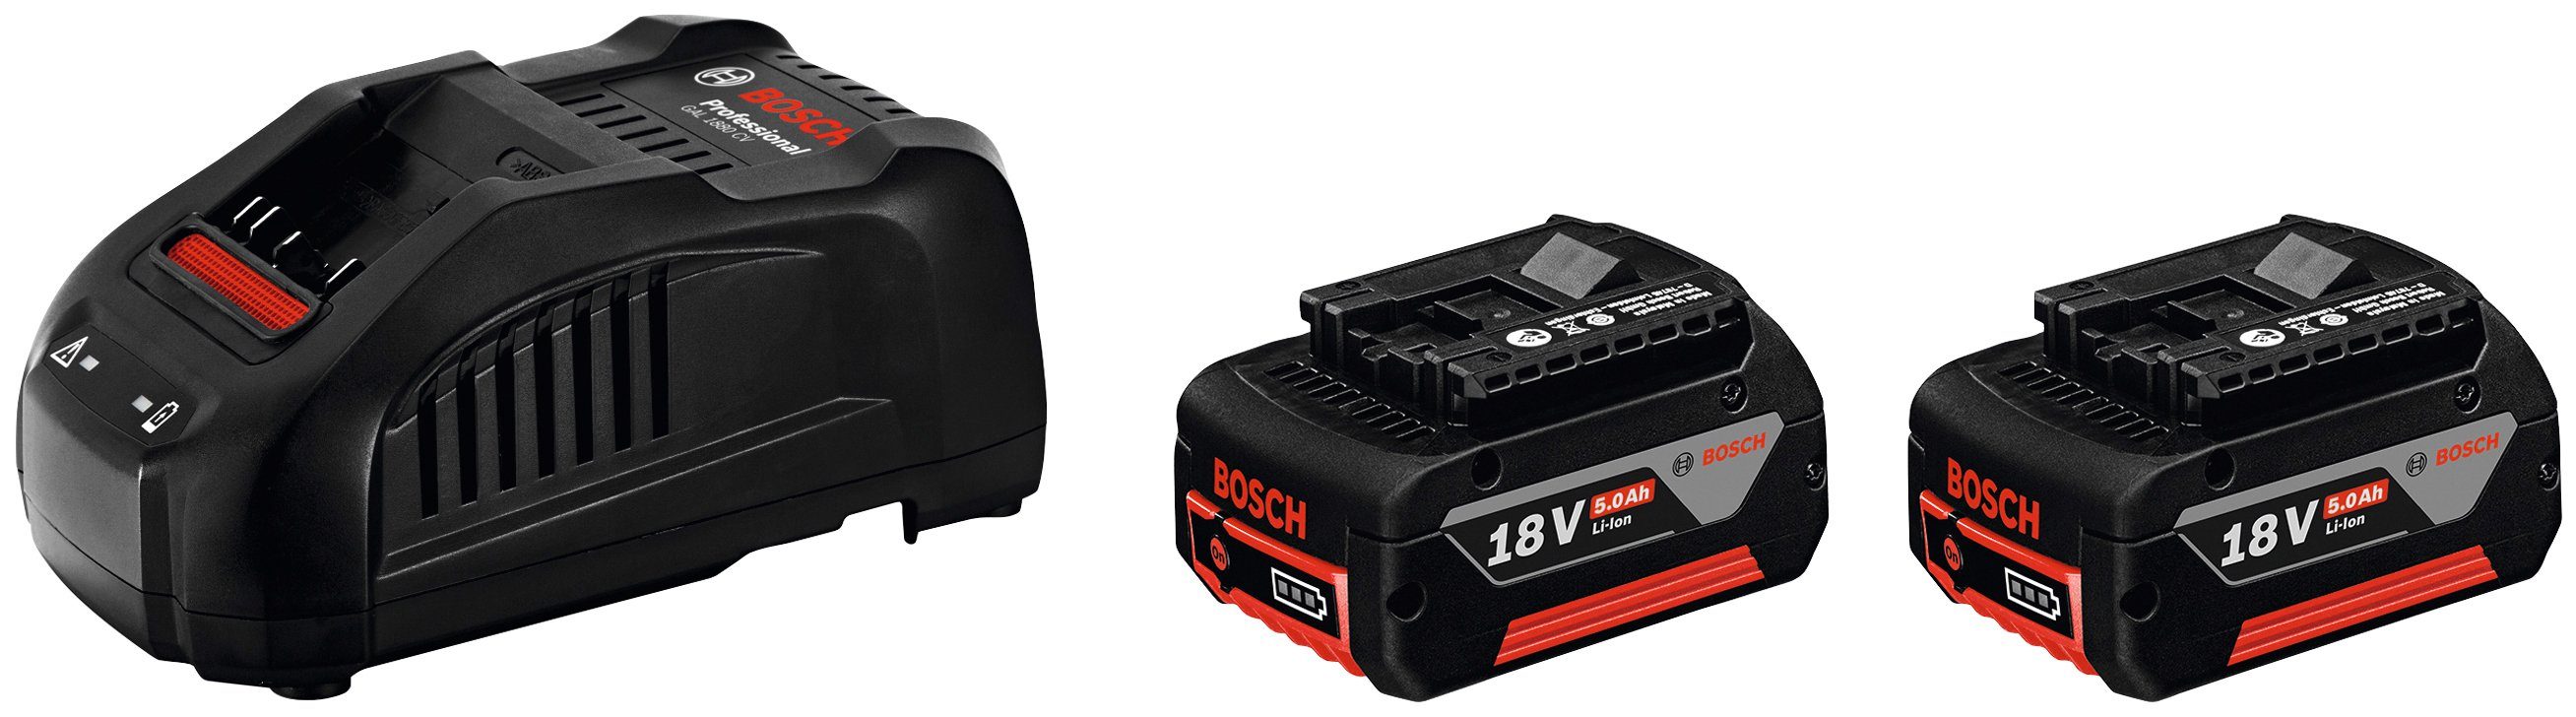 Bosch Professional GAL 1880 CV / GBA 18V 5.0Ah Akku Starter-Set, inkl. Ladegerät